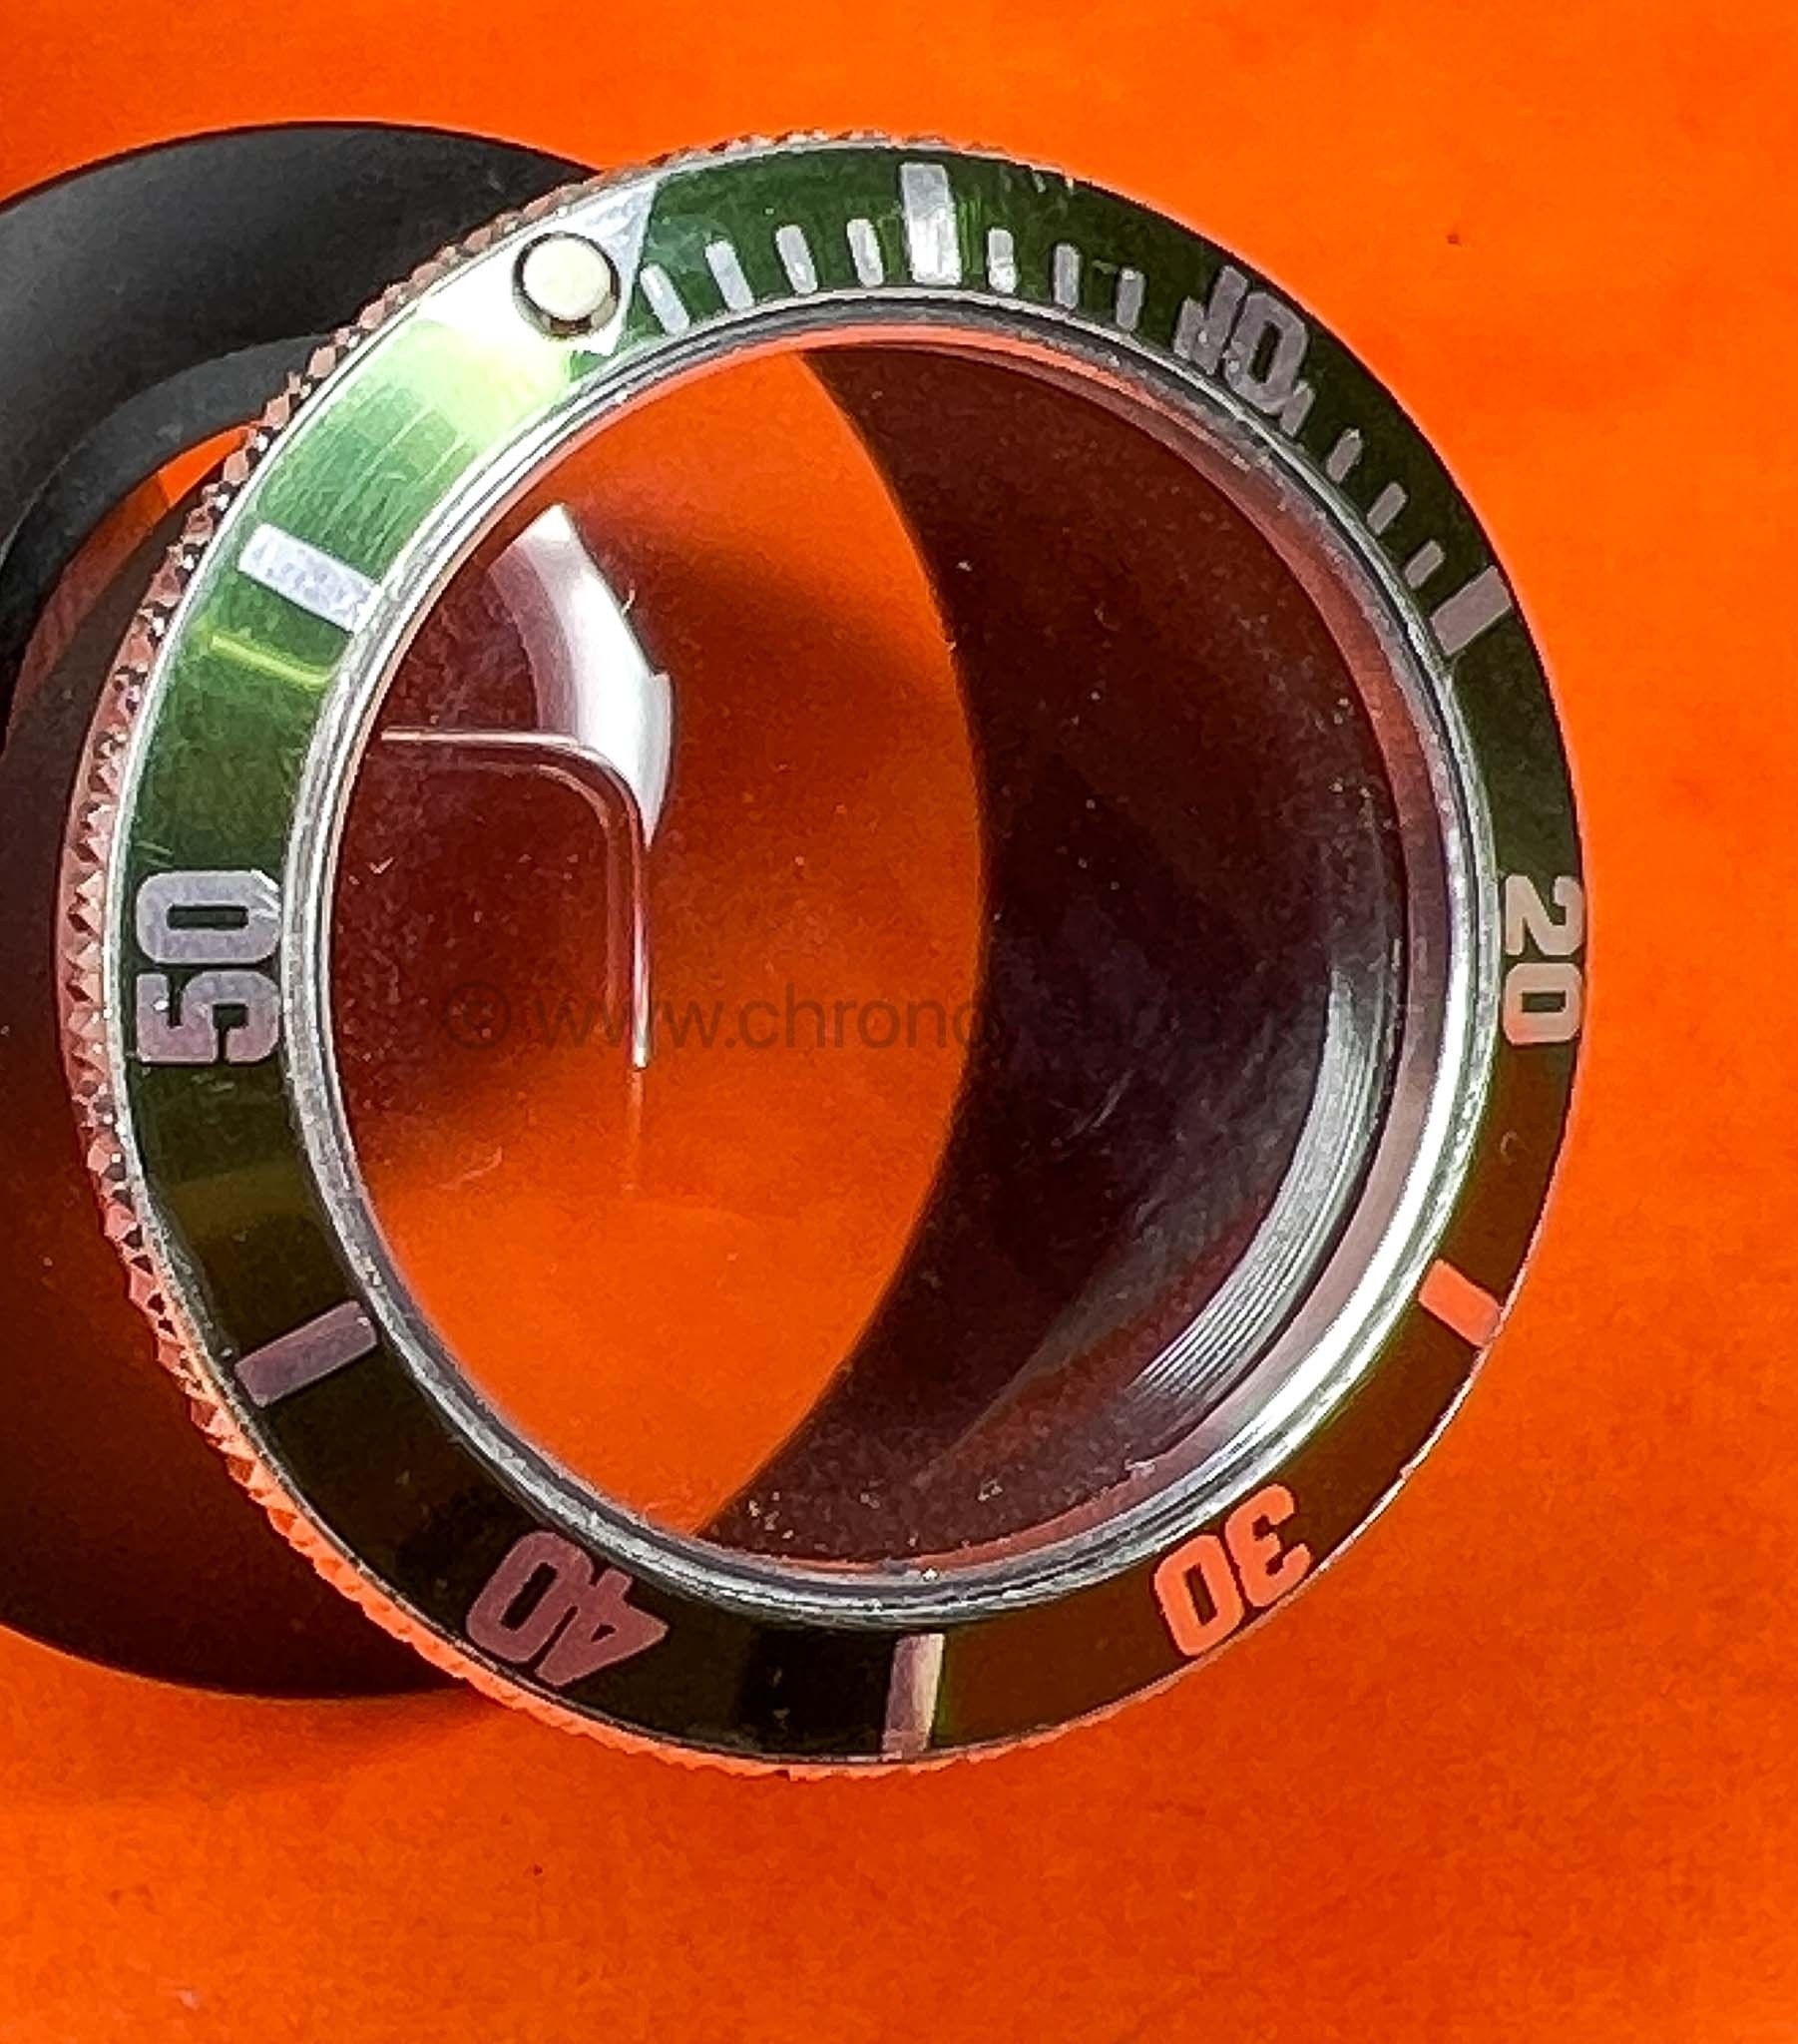 Magnifier Rolex style loupe X5 Graduated Bezel Green insert Submariner 16610LV,116610LV,126610LV glasses lens magnifying glass